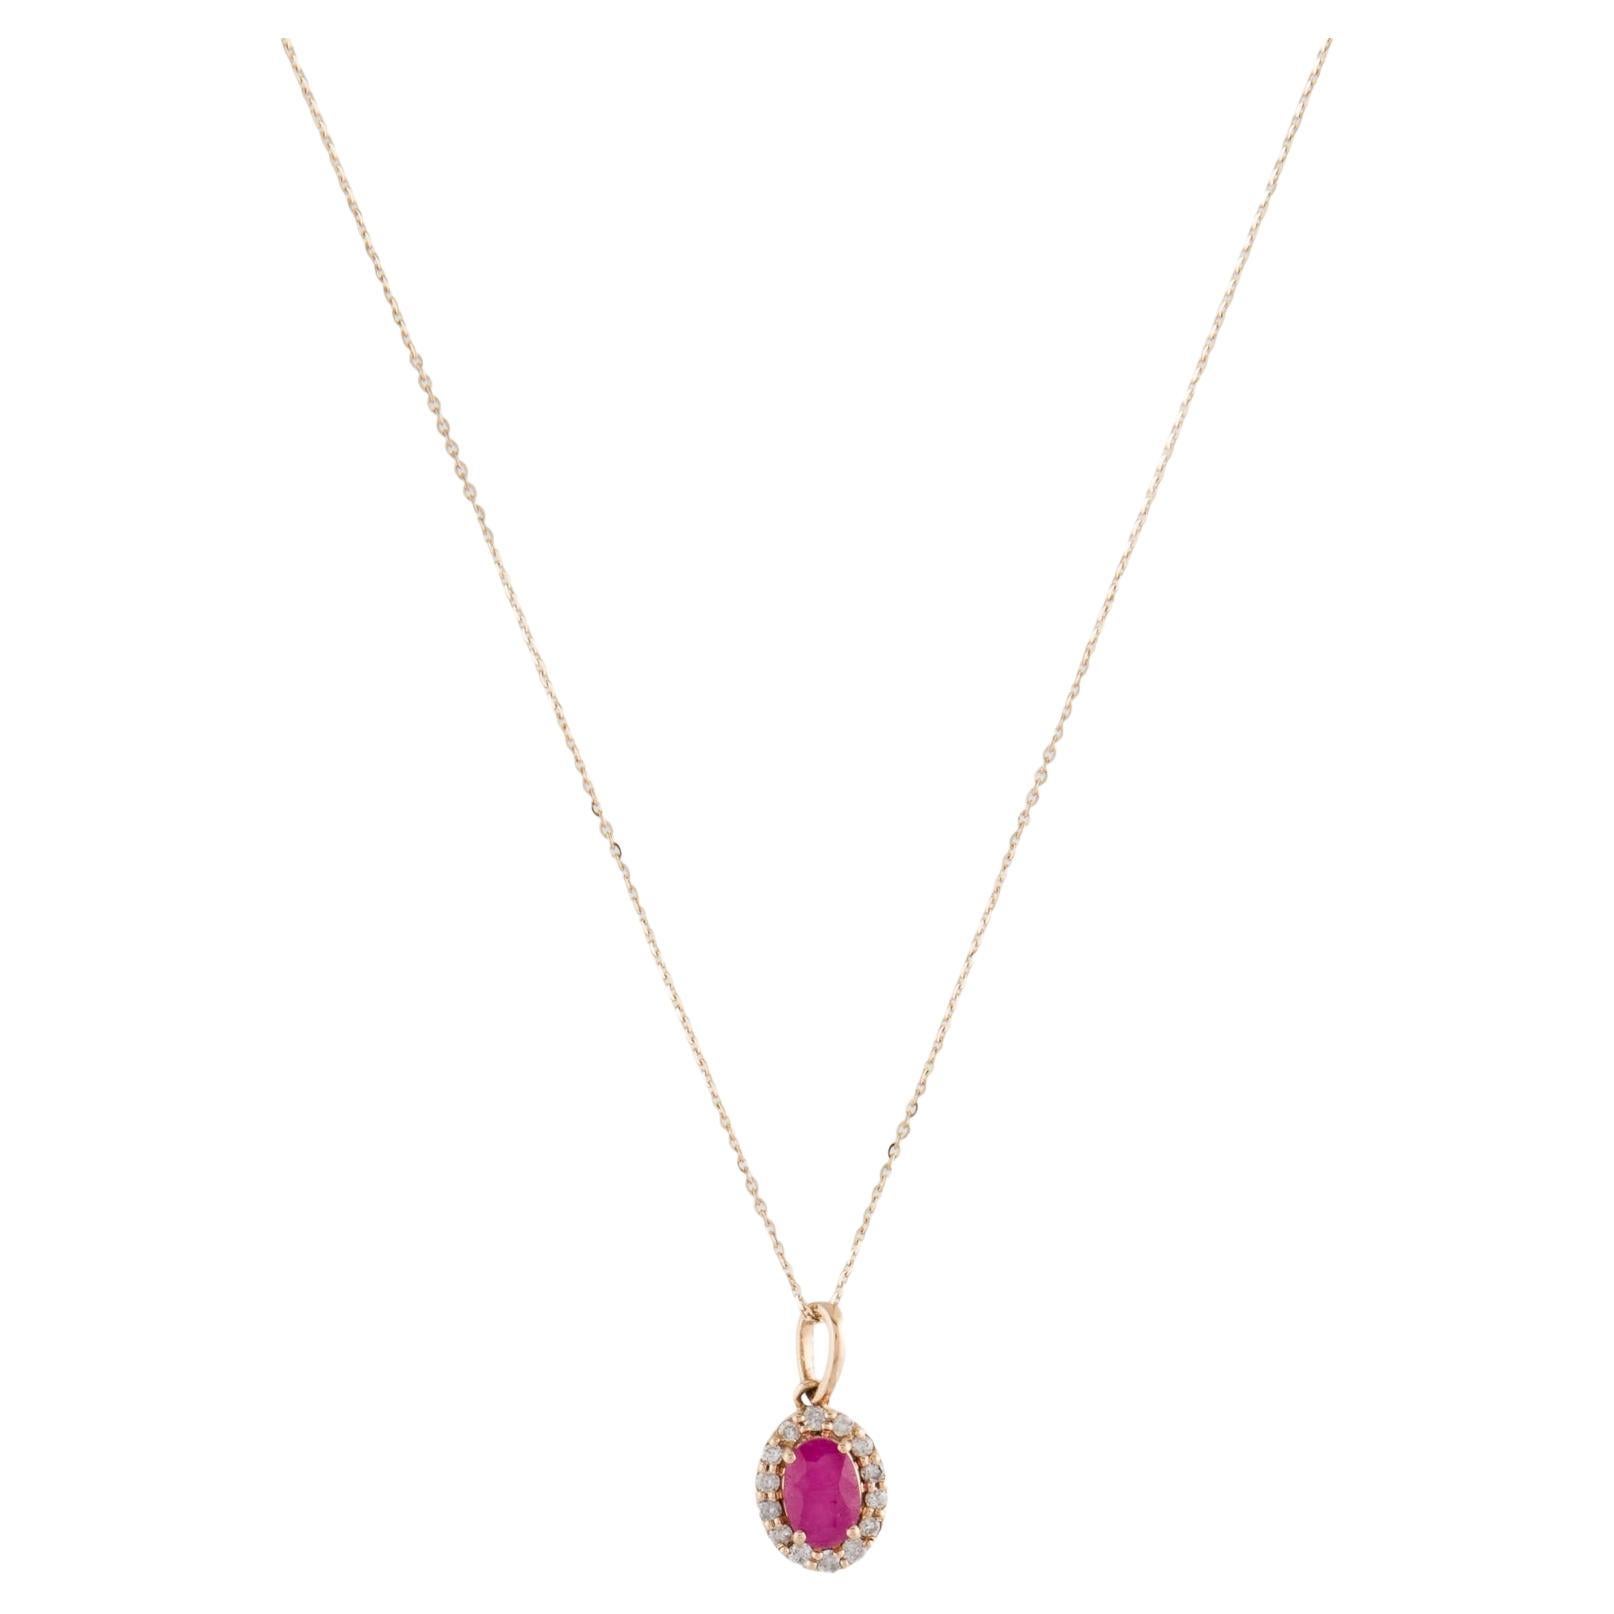 14K Ruby & Diamond Pendant Necklace - Stunning Gemstone Statement Piece